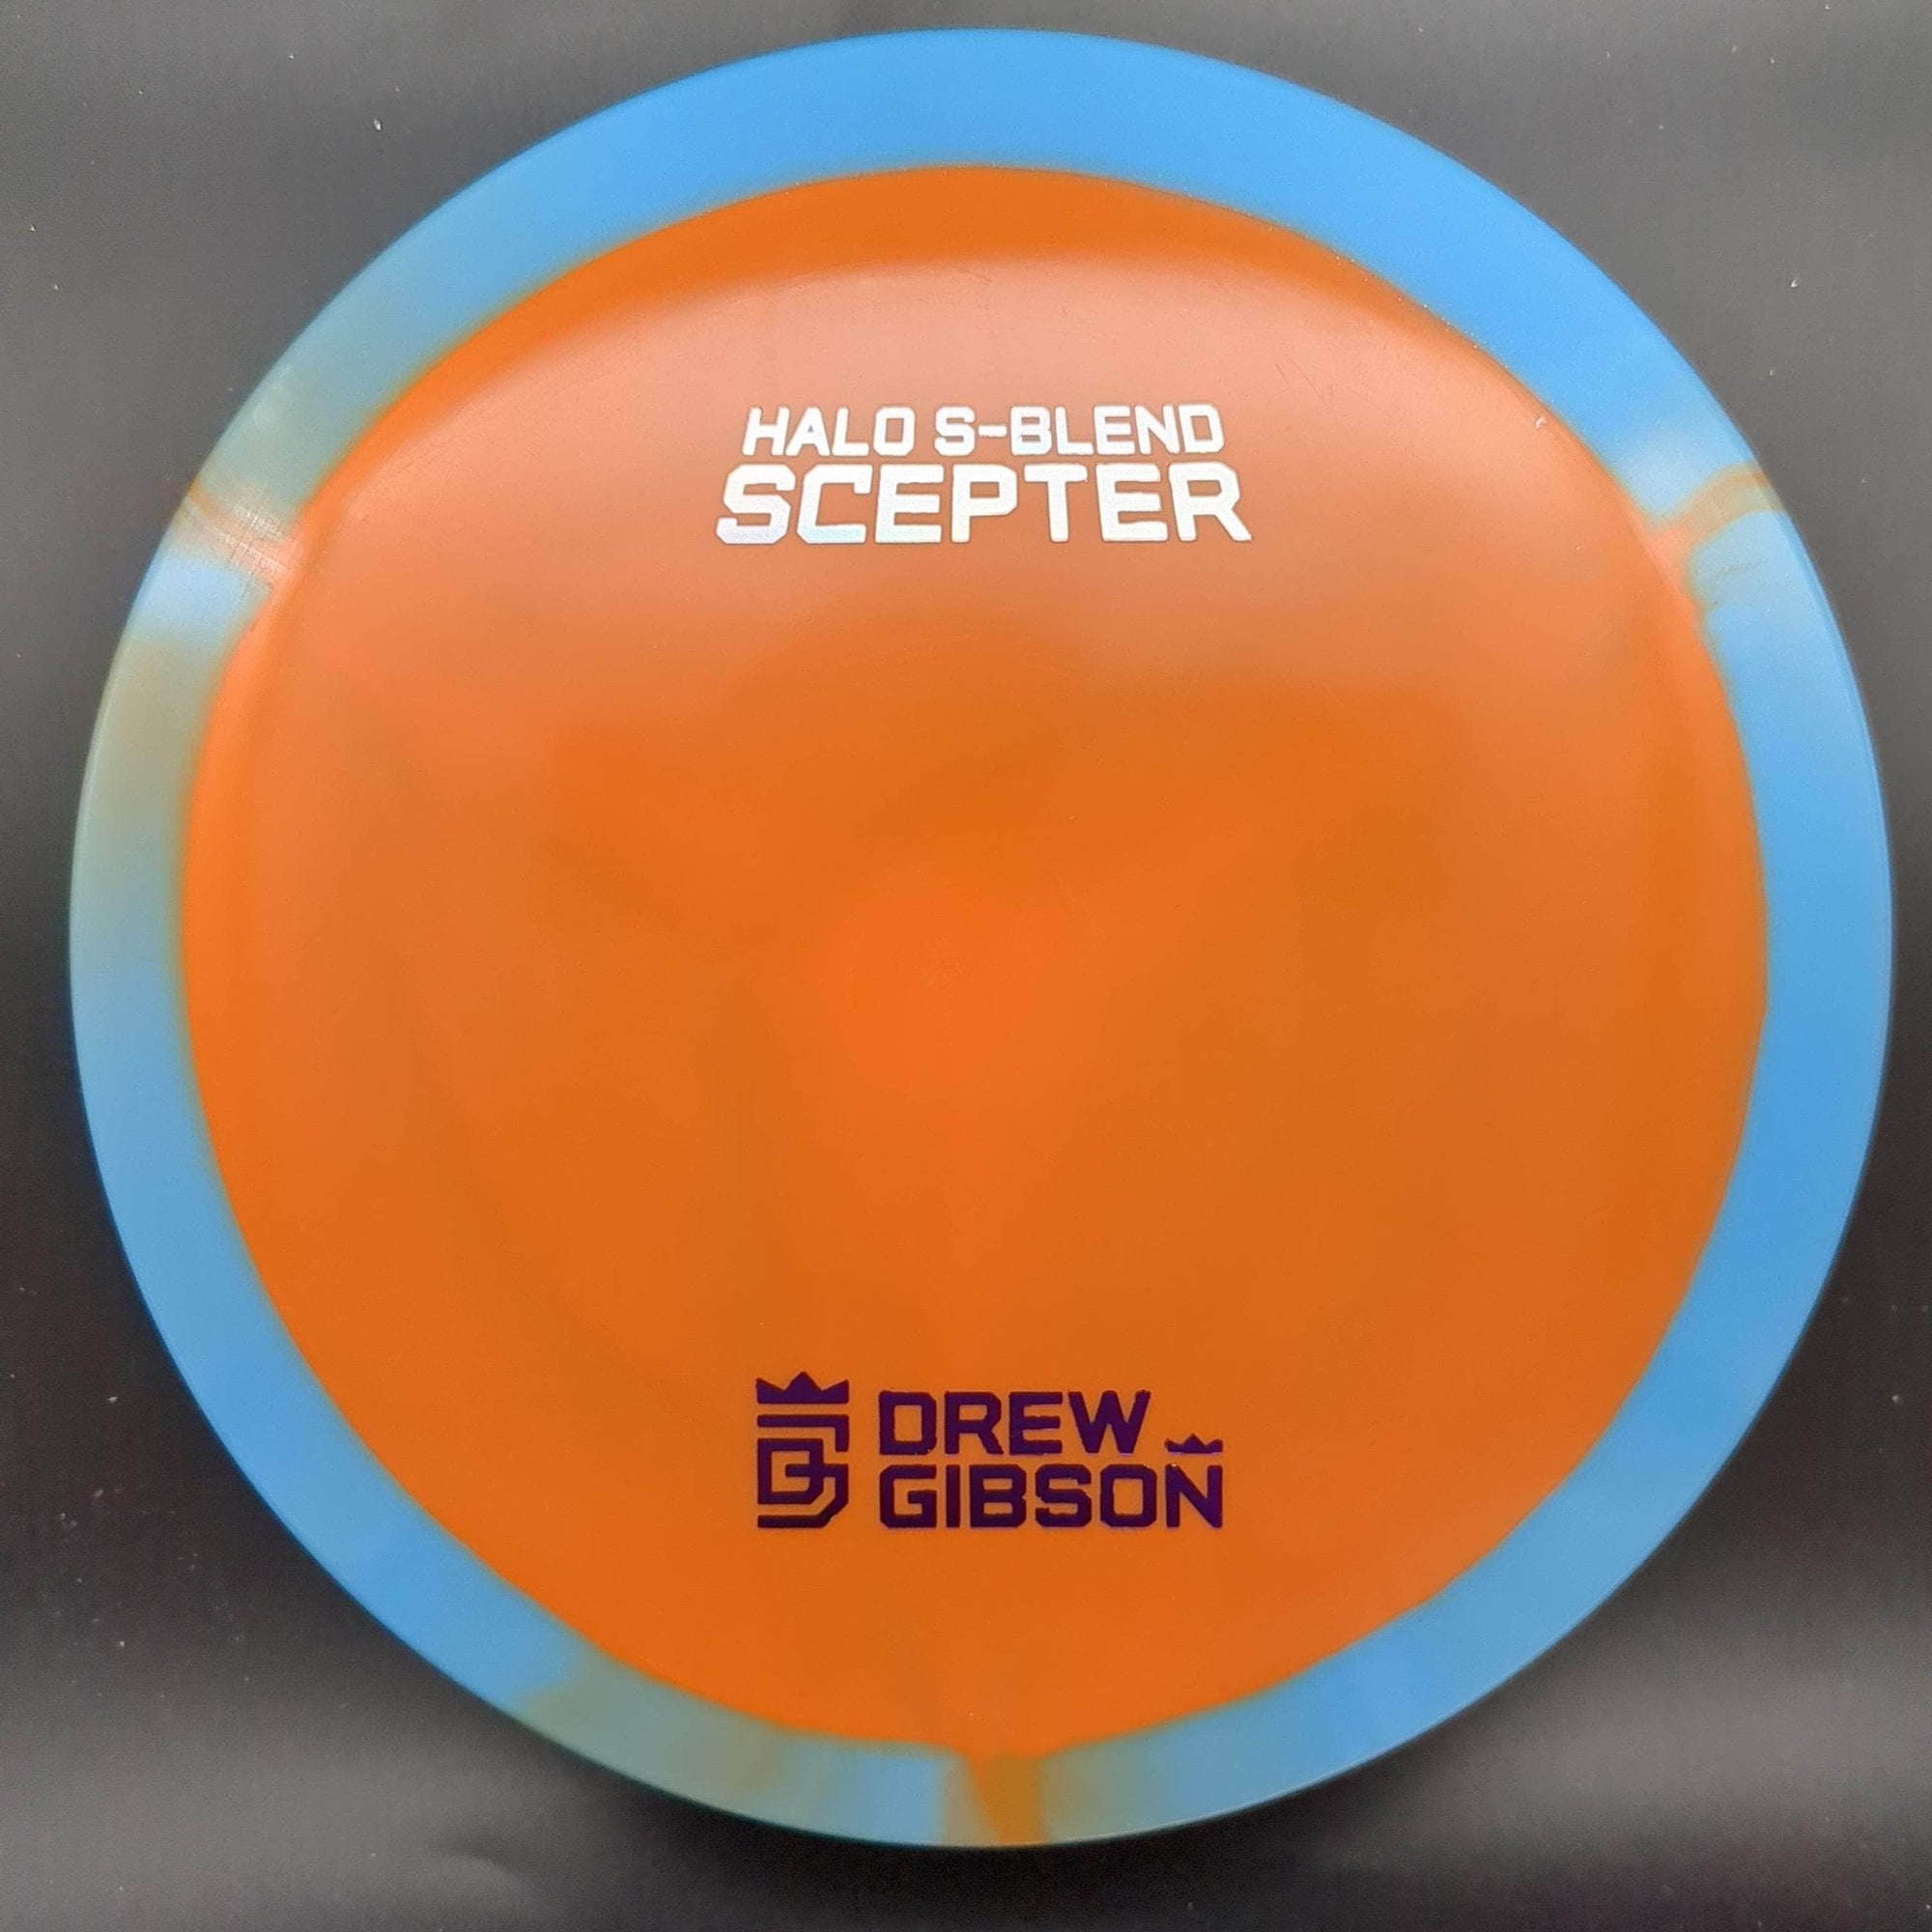 Infinite Discs Fairway Driver Teal Rim Orange Plate Silver/Purple Stamp 175g Scepter, Halo S-Blend, Drew Gibson Edition